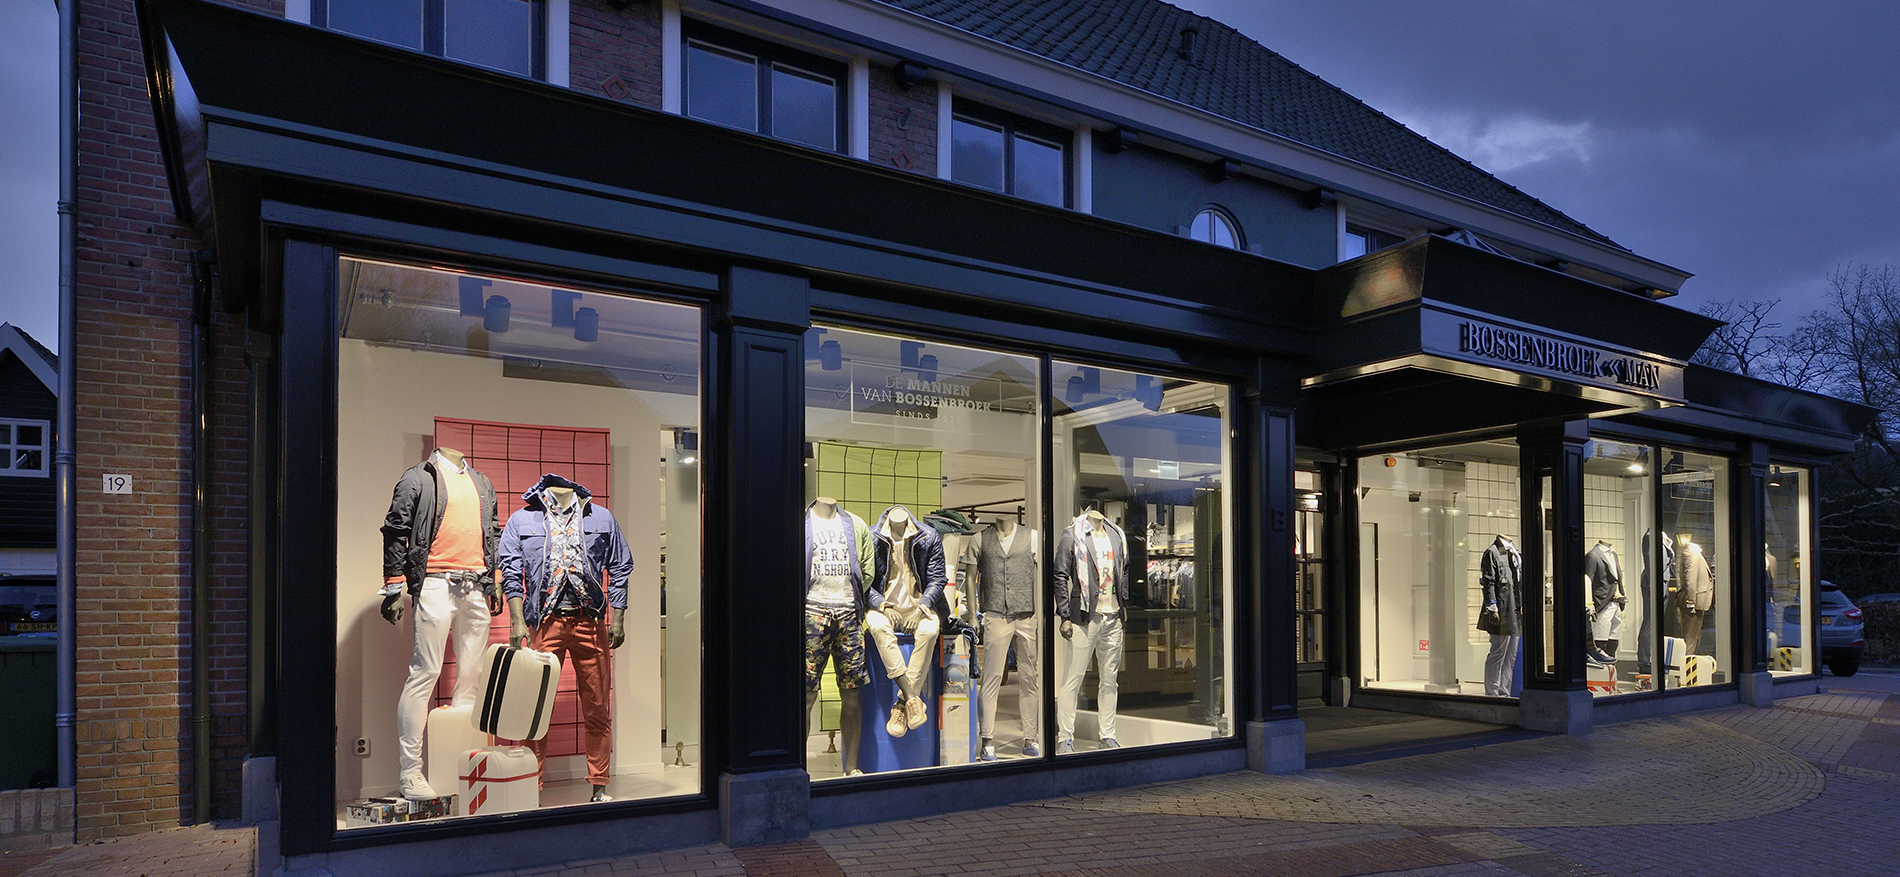 Bossenbroek Men’s Fashion: Retail design and shopfitting - Fashion